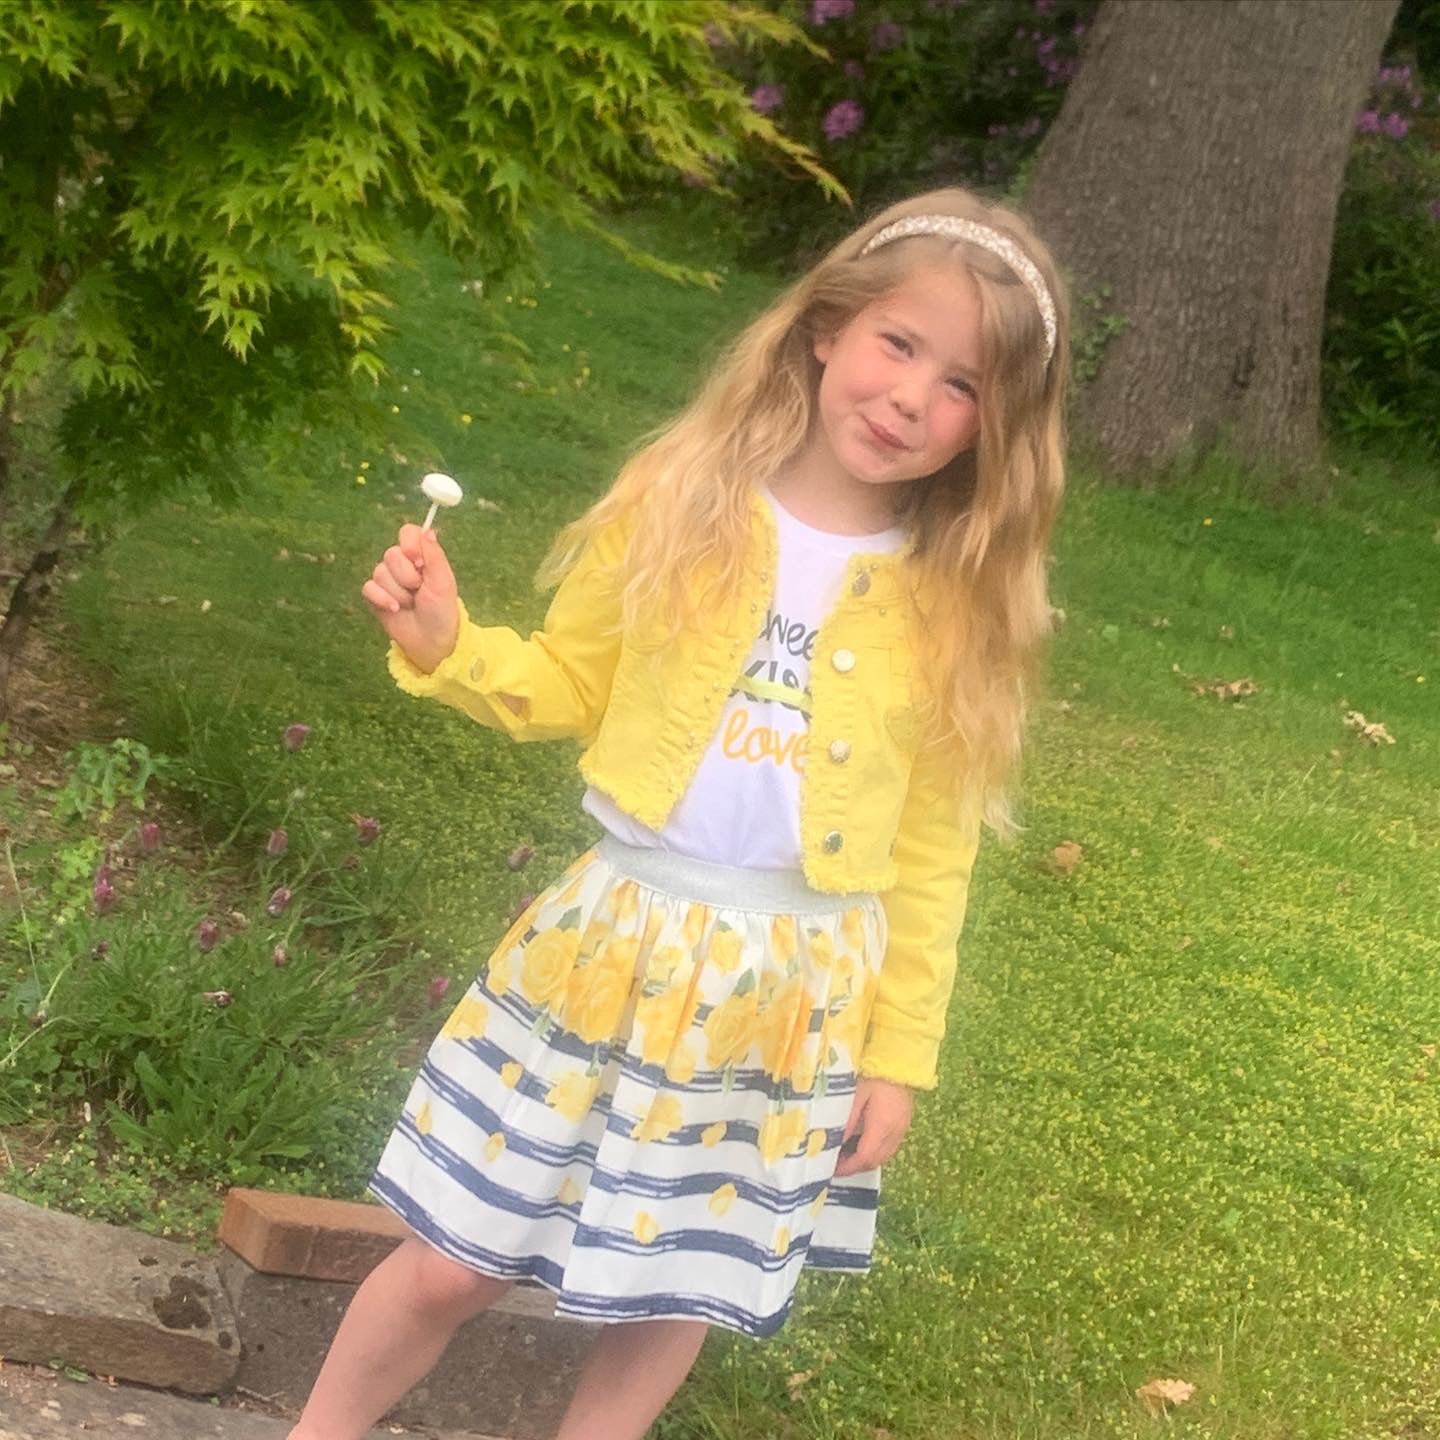 Ebita “Ivy” Boutique Summer Yellow Roses Skirt & Jacket Set